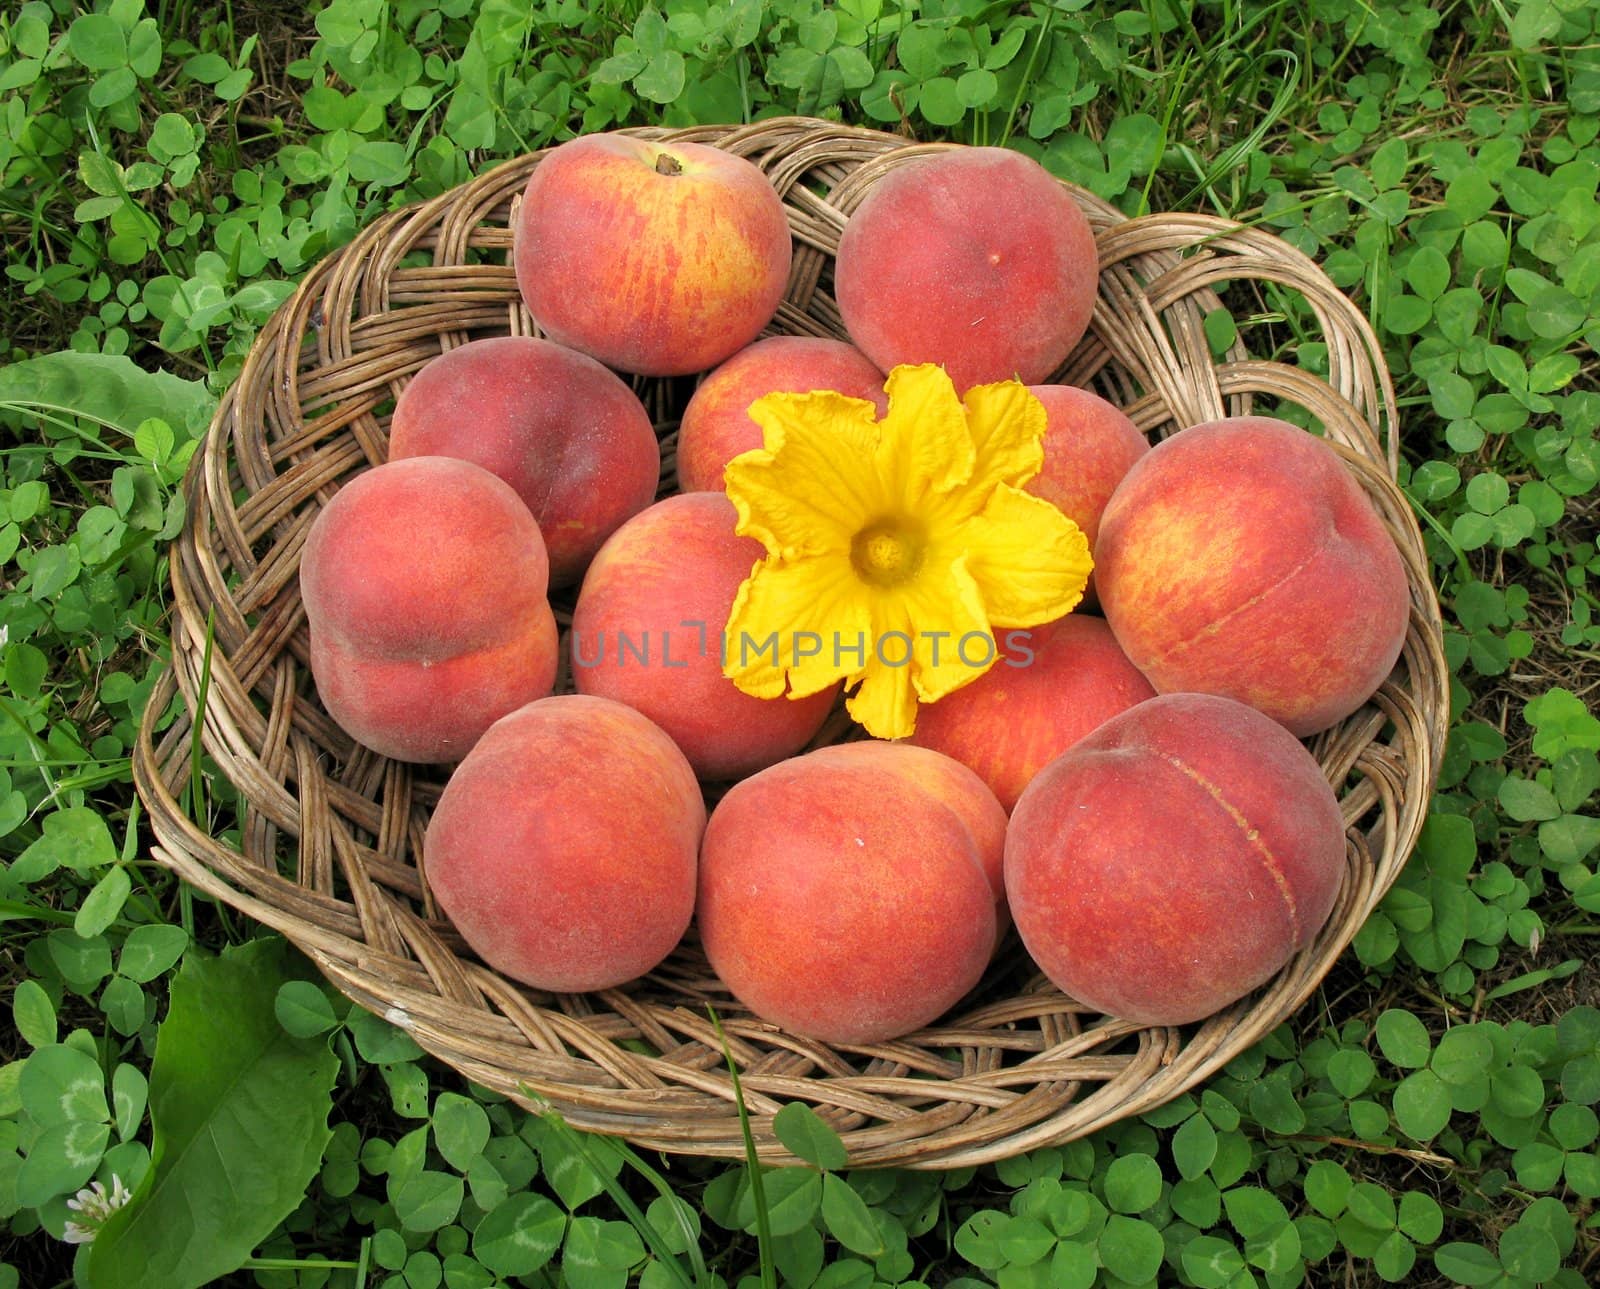 Basket of peaches with pumpkin flower